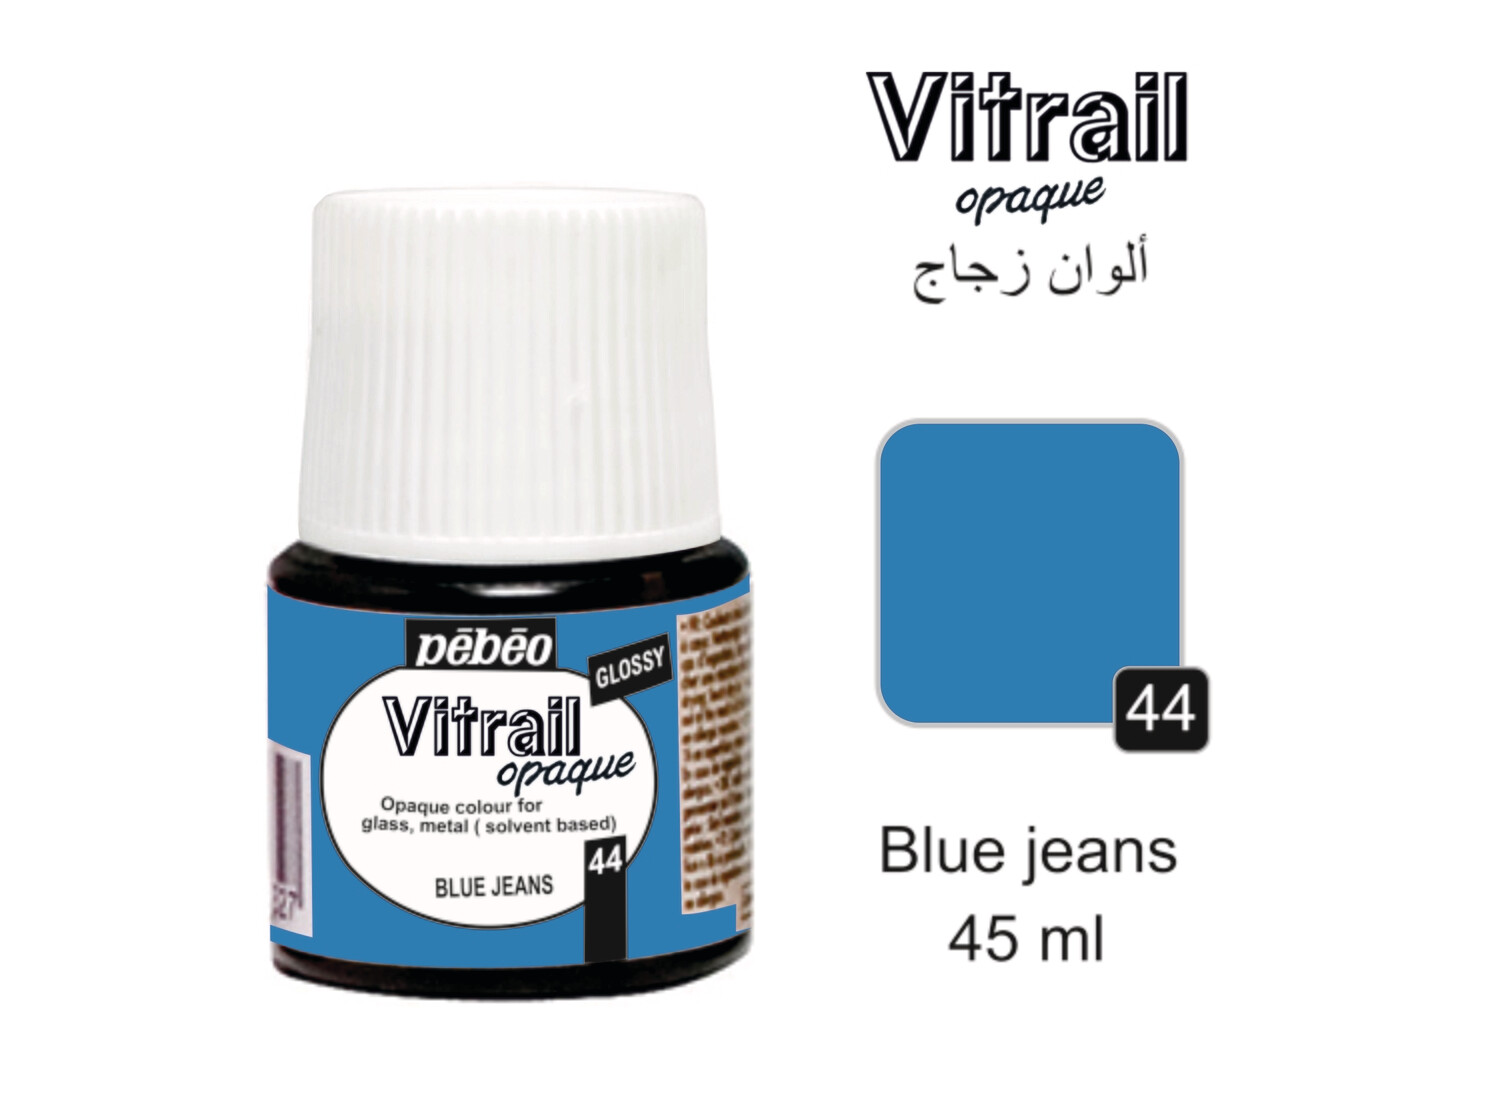 VITRAIL glass colors Blue jeans No. 44, 45 ml, Opaque